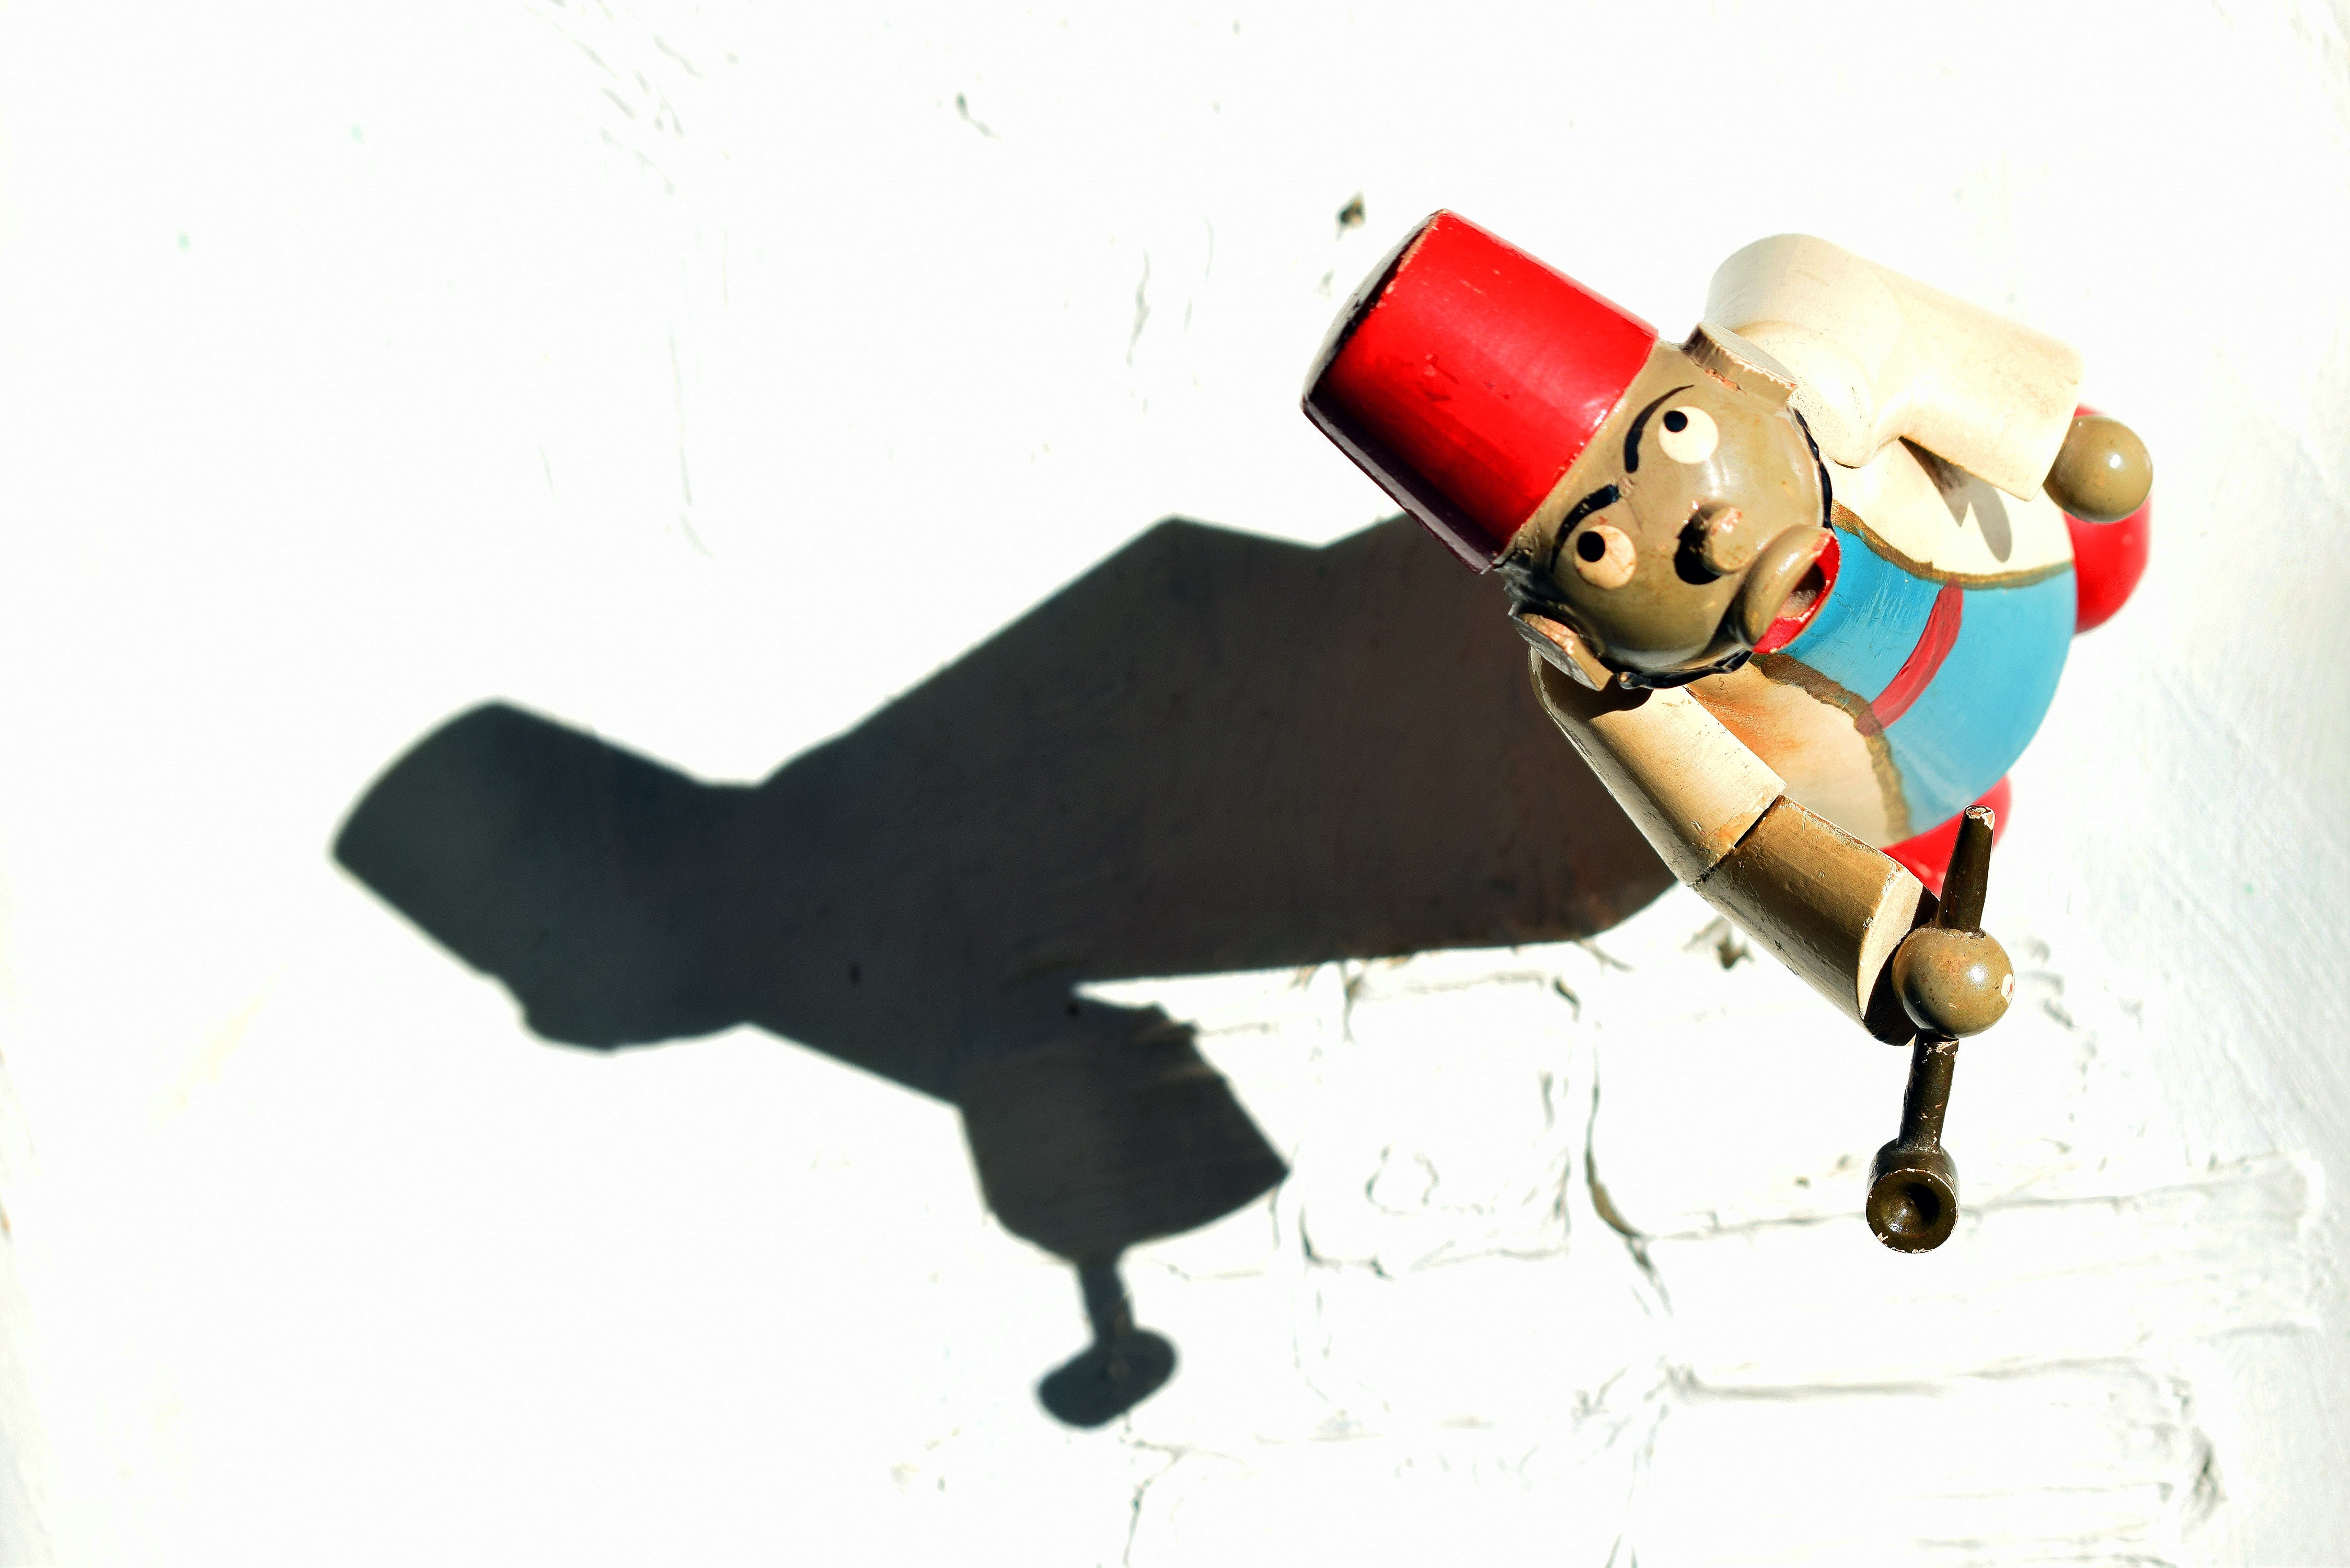 the nutcracker figurine